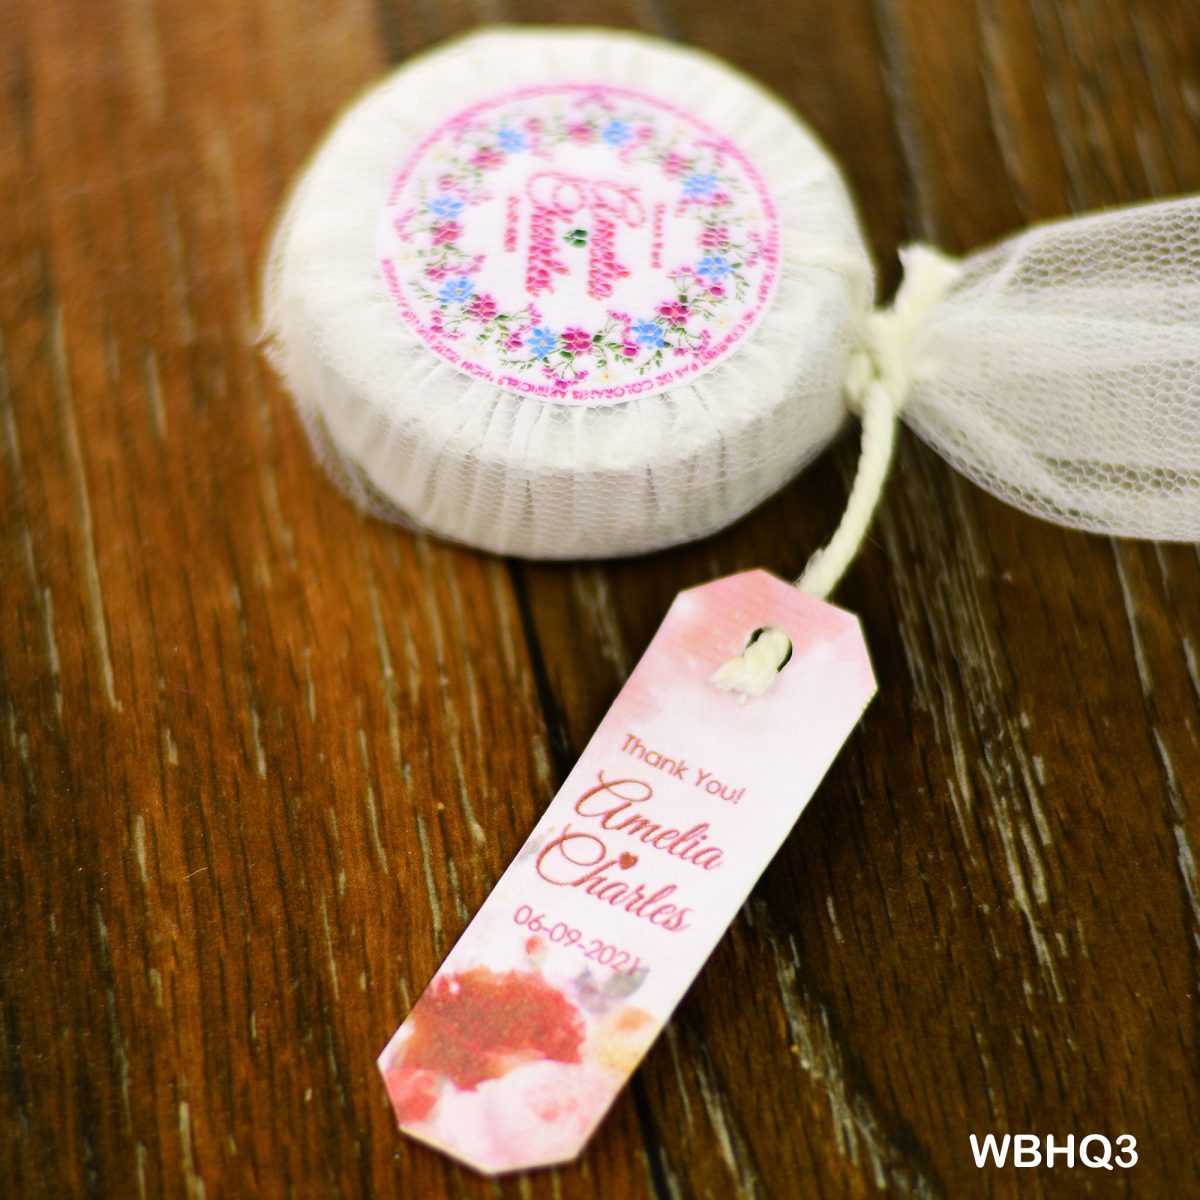 Mini Wedding Soap Favors - Rustic Guest Soaps - Choose your scent - Customize your wrap design -hotel soap size